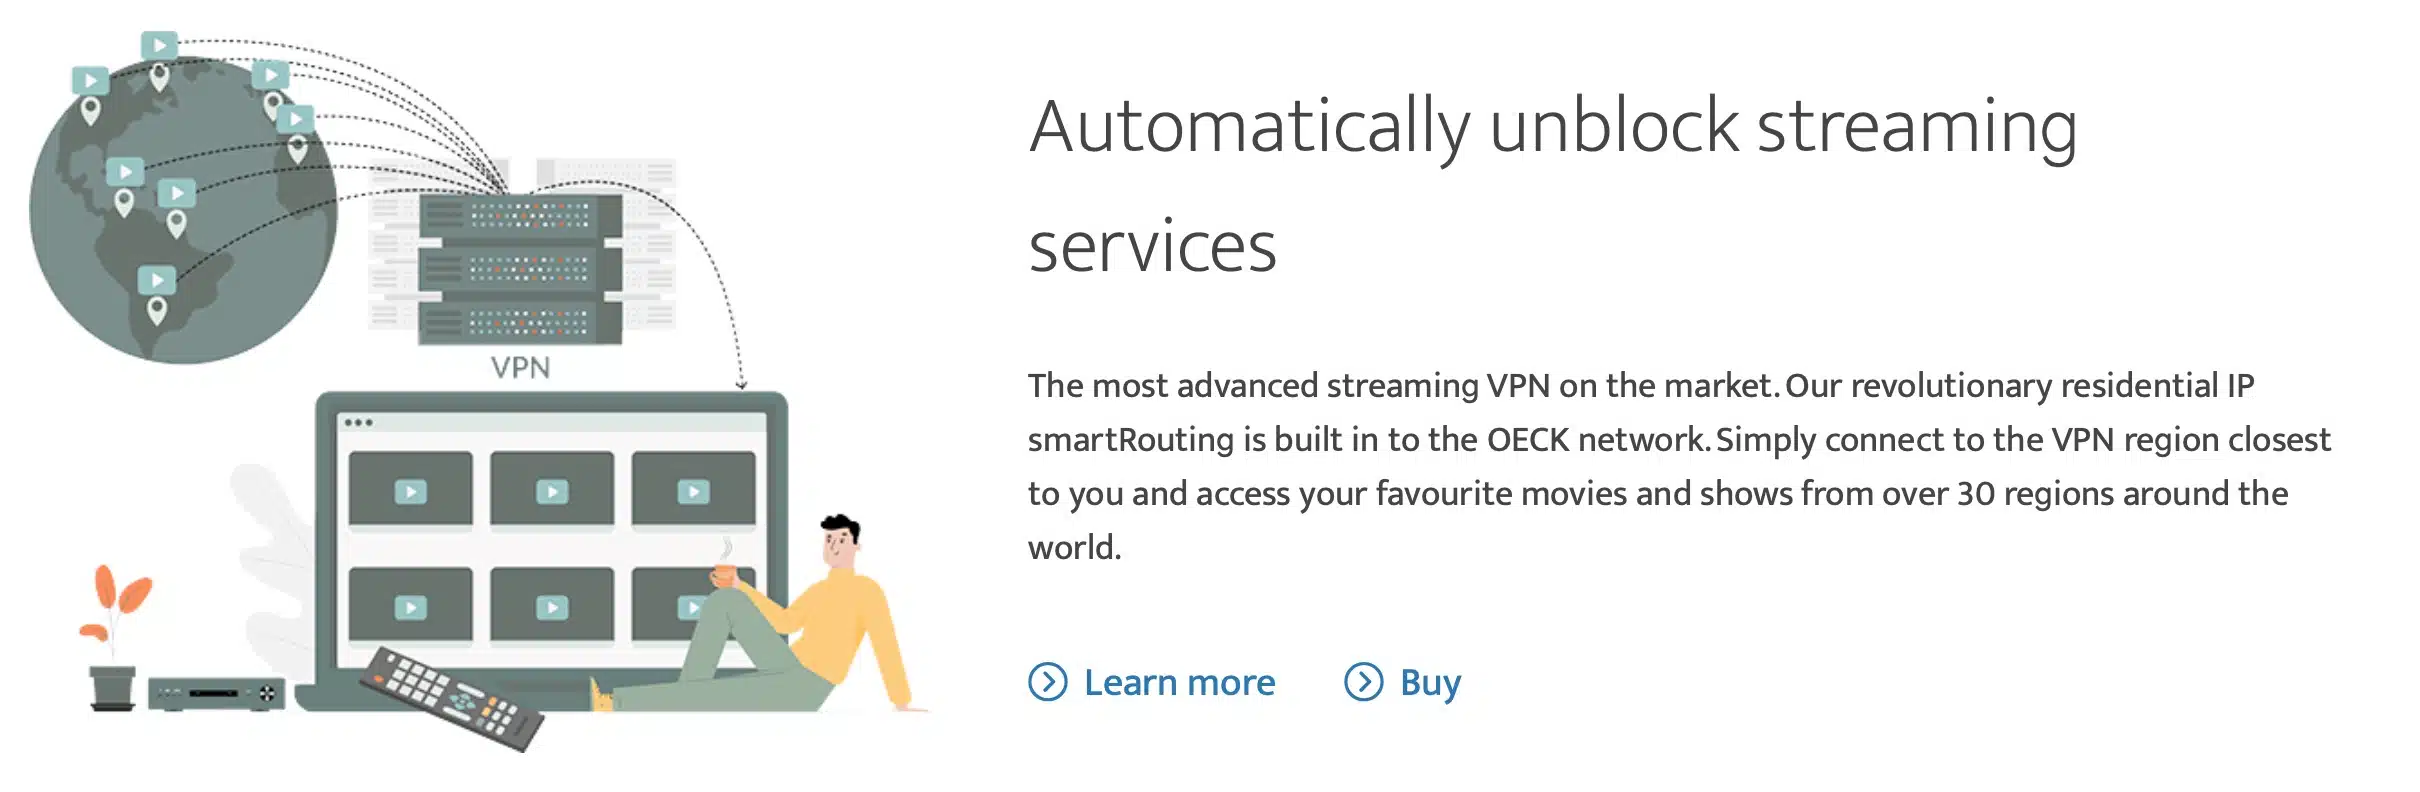 Oeck VPN - Streaming